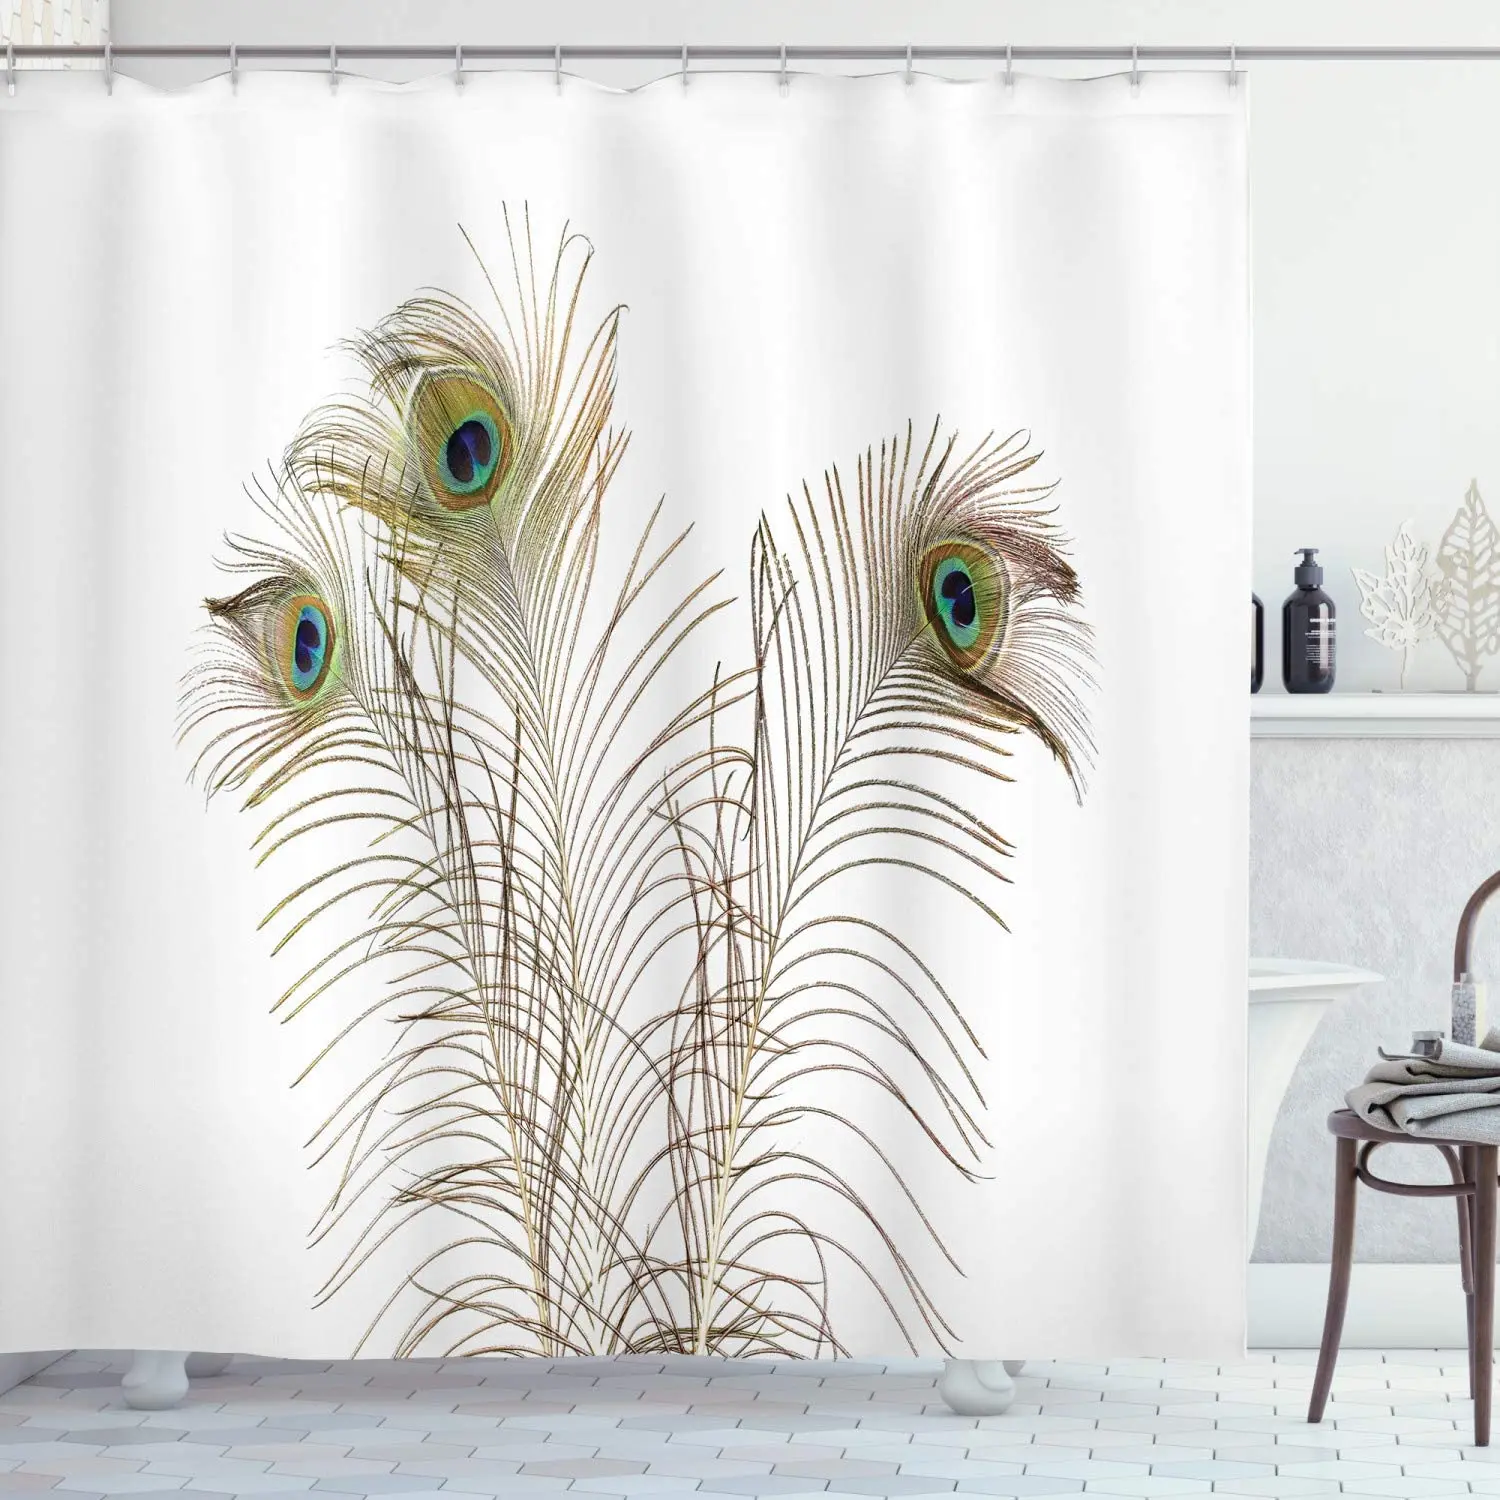 

Peacocks Feathers Shower Curtain Closeup Simple Picture Minimalistic Design Print Cloth Fabric Bathroom Decor Set With Hooks